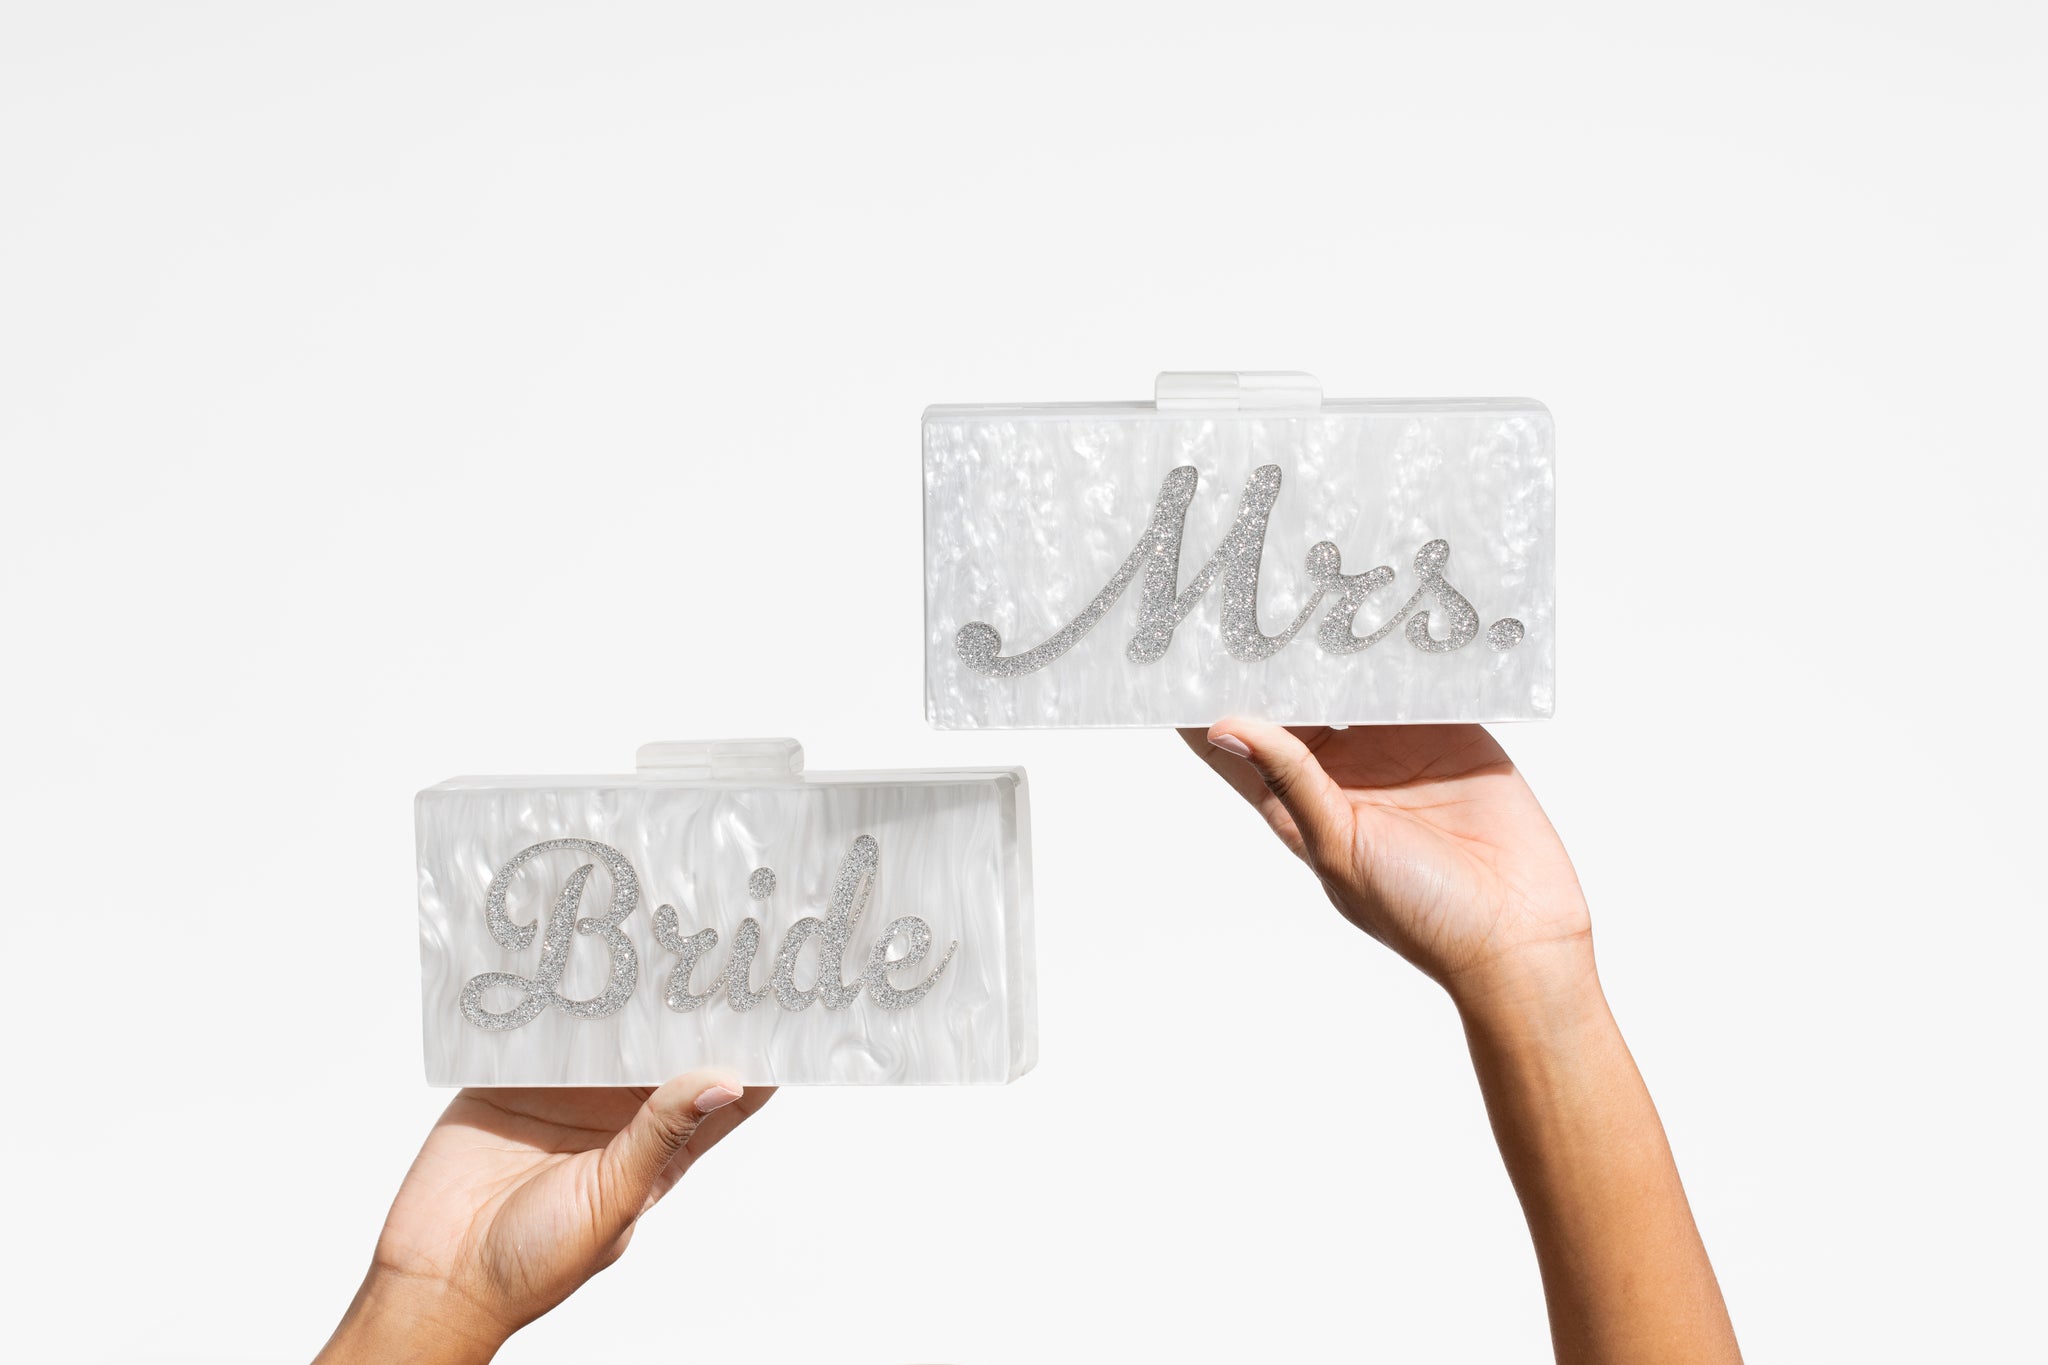 White Bridal Acrylic Box Purse Clutch - Gift for Bridal Shower Etc